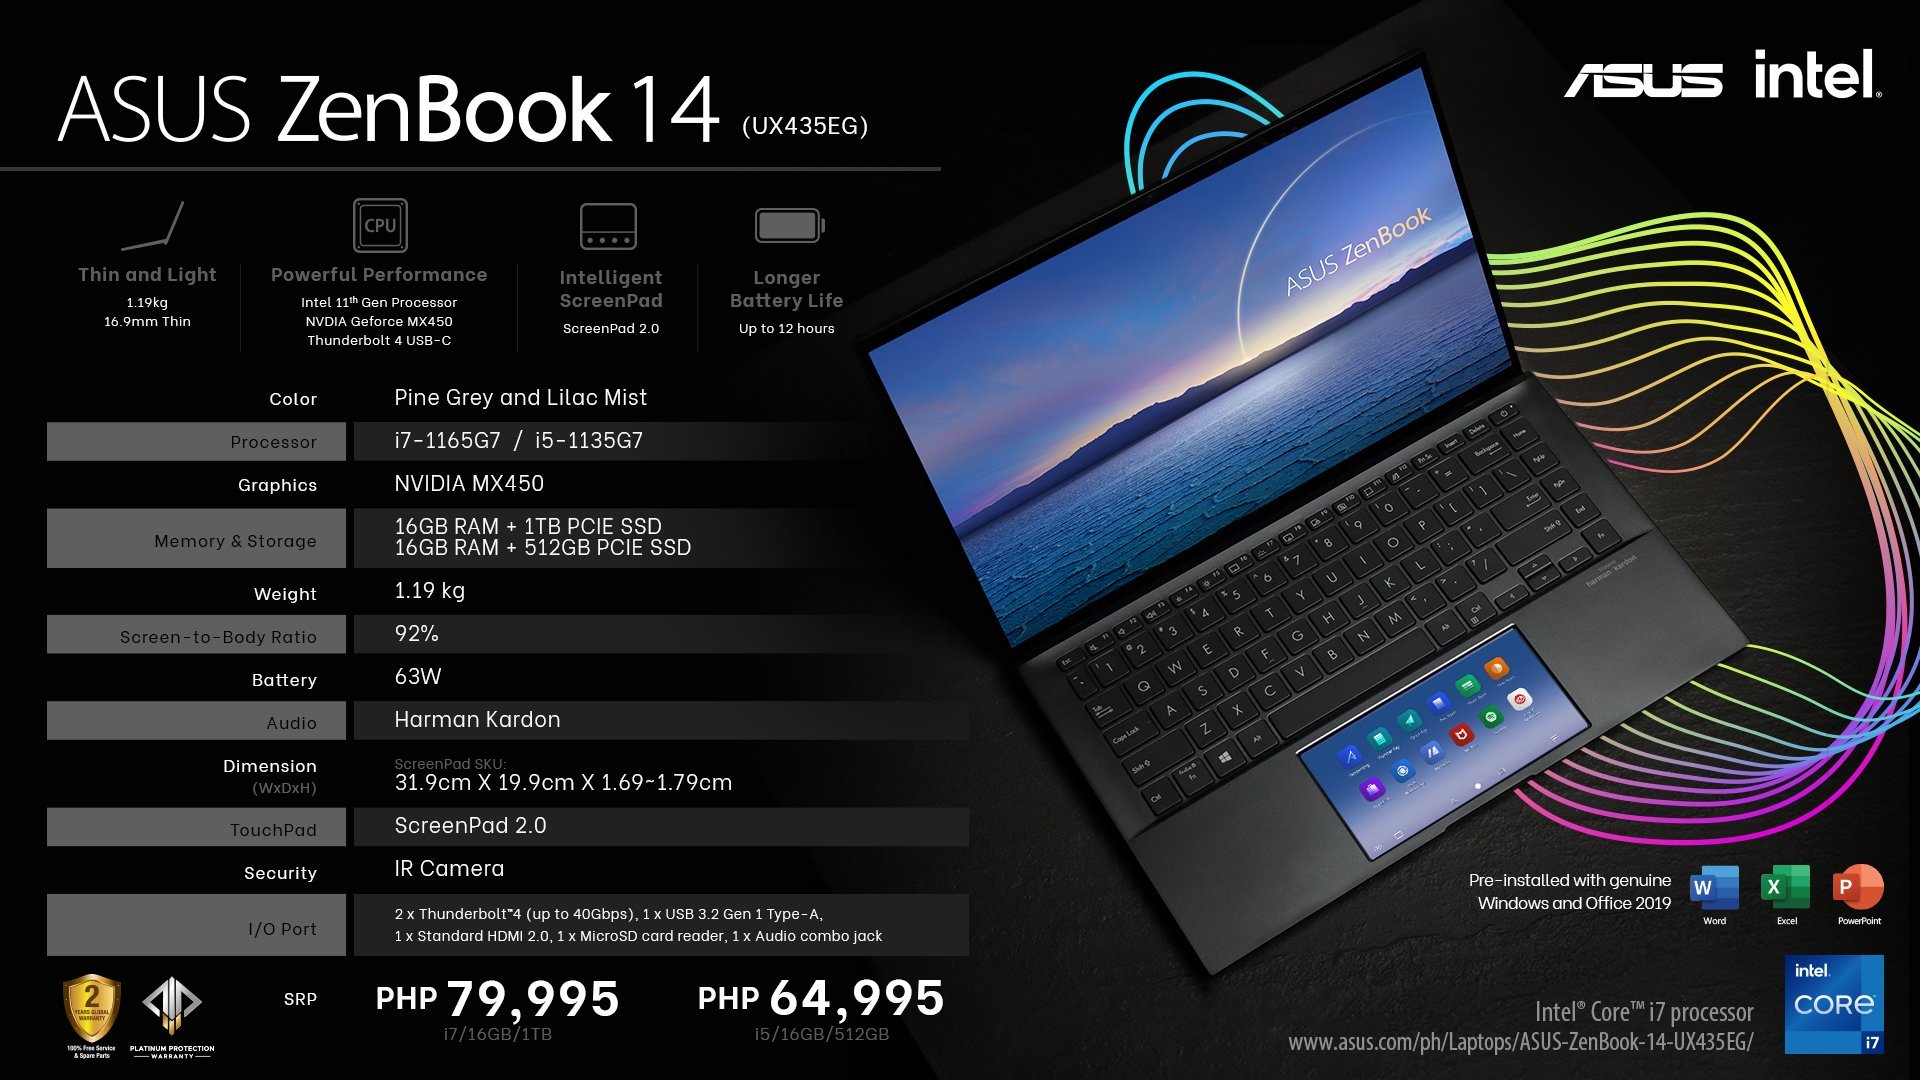 ASUS ZenBook 14 (UX435EG) Price